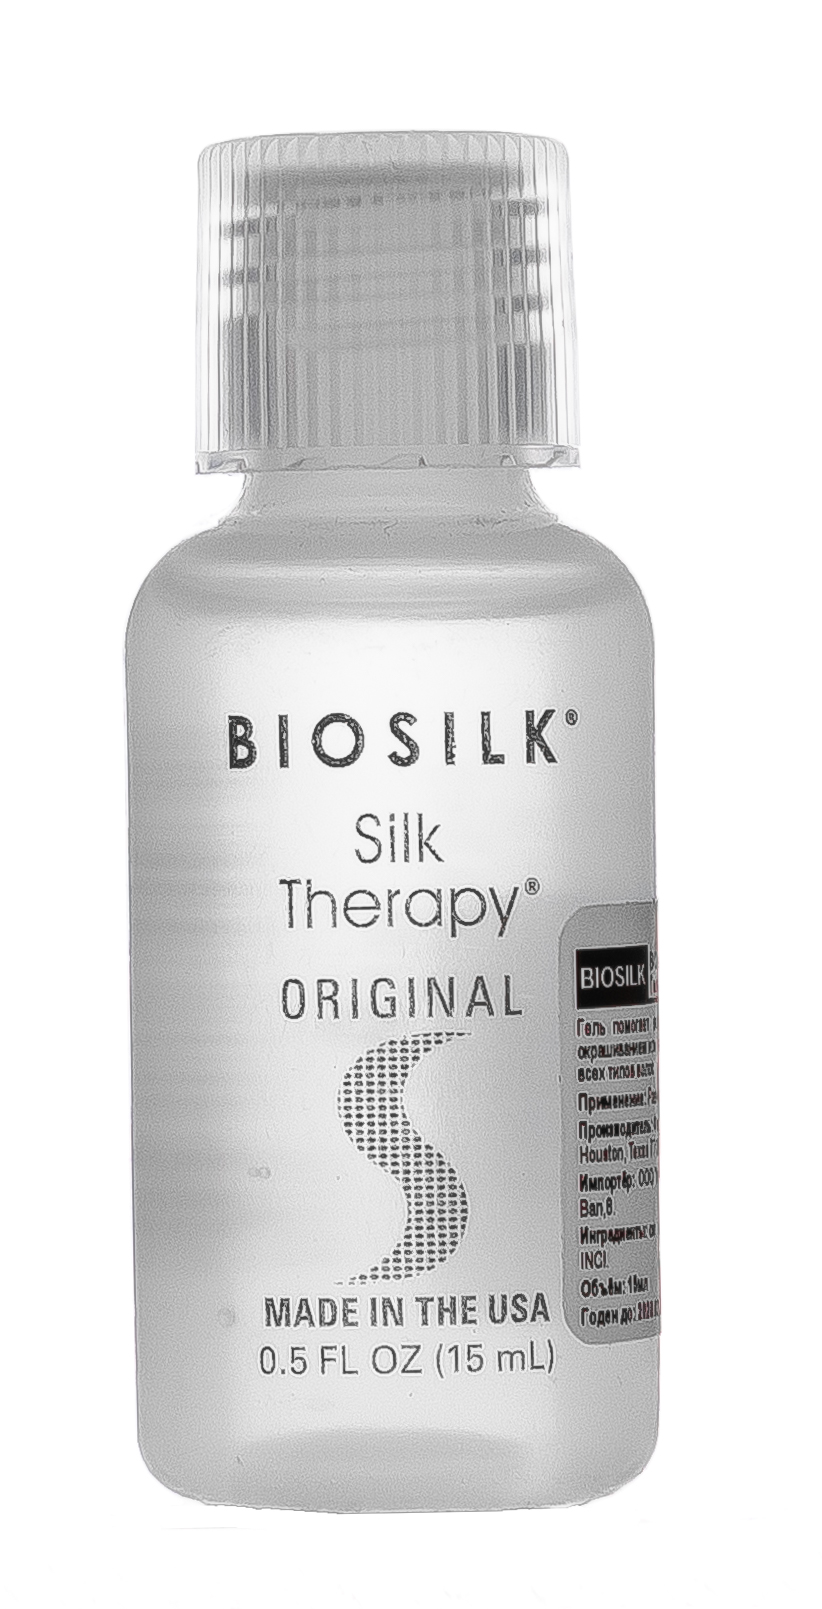 Гель для волос Biosilk Silk Therapy Original увлажняющий 15 мл сыворотка для волос biosilk